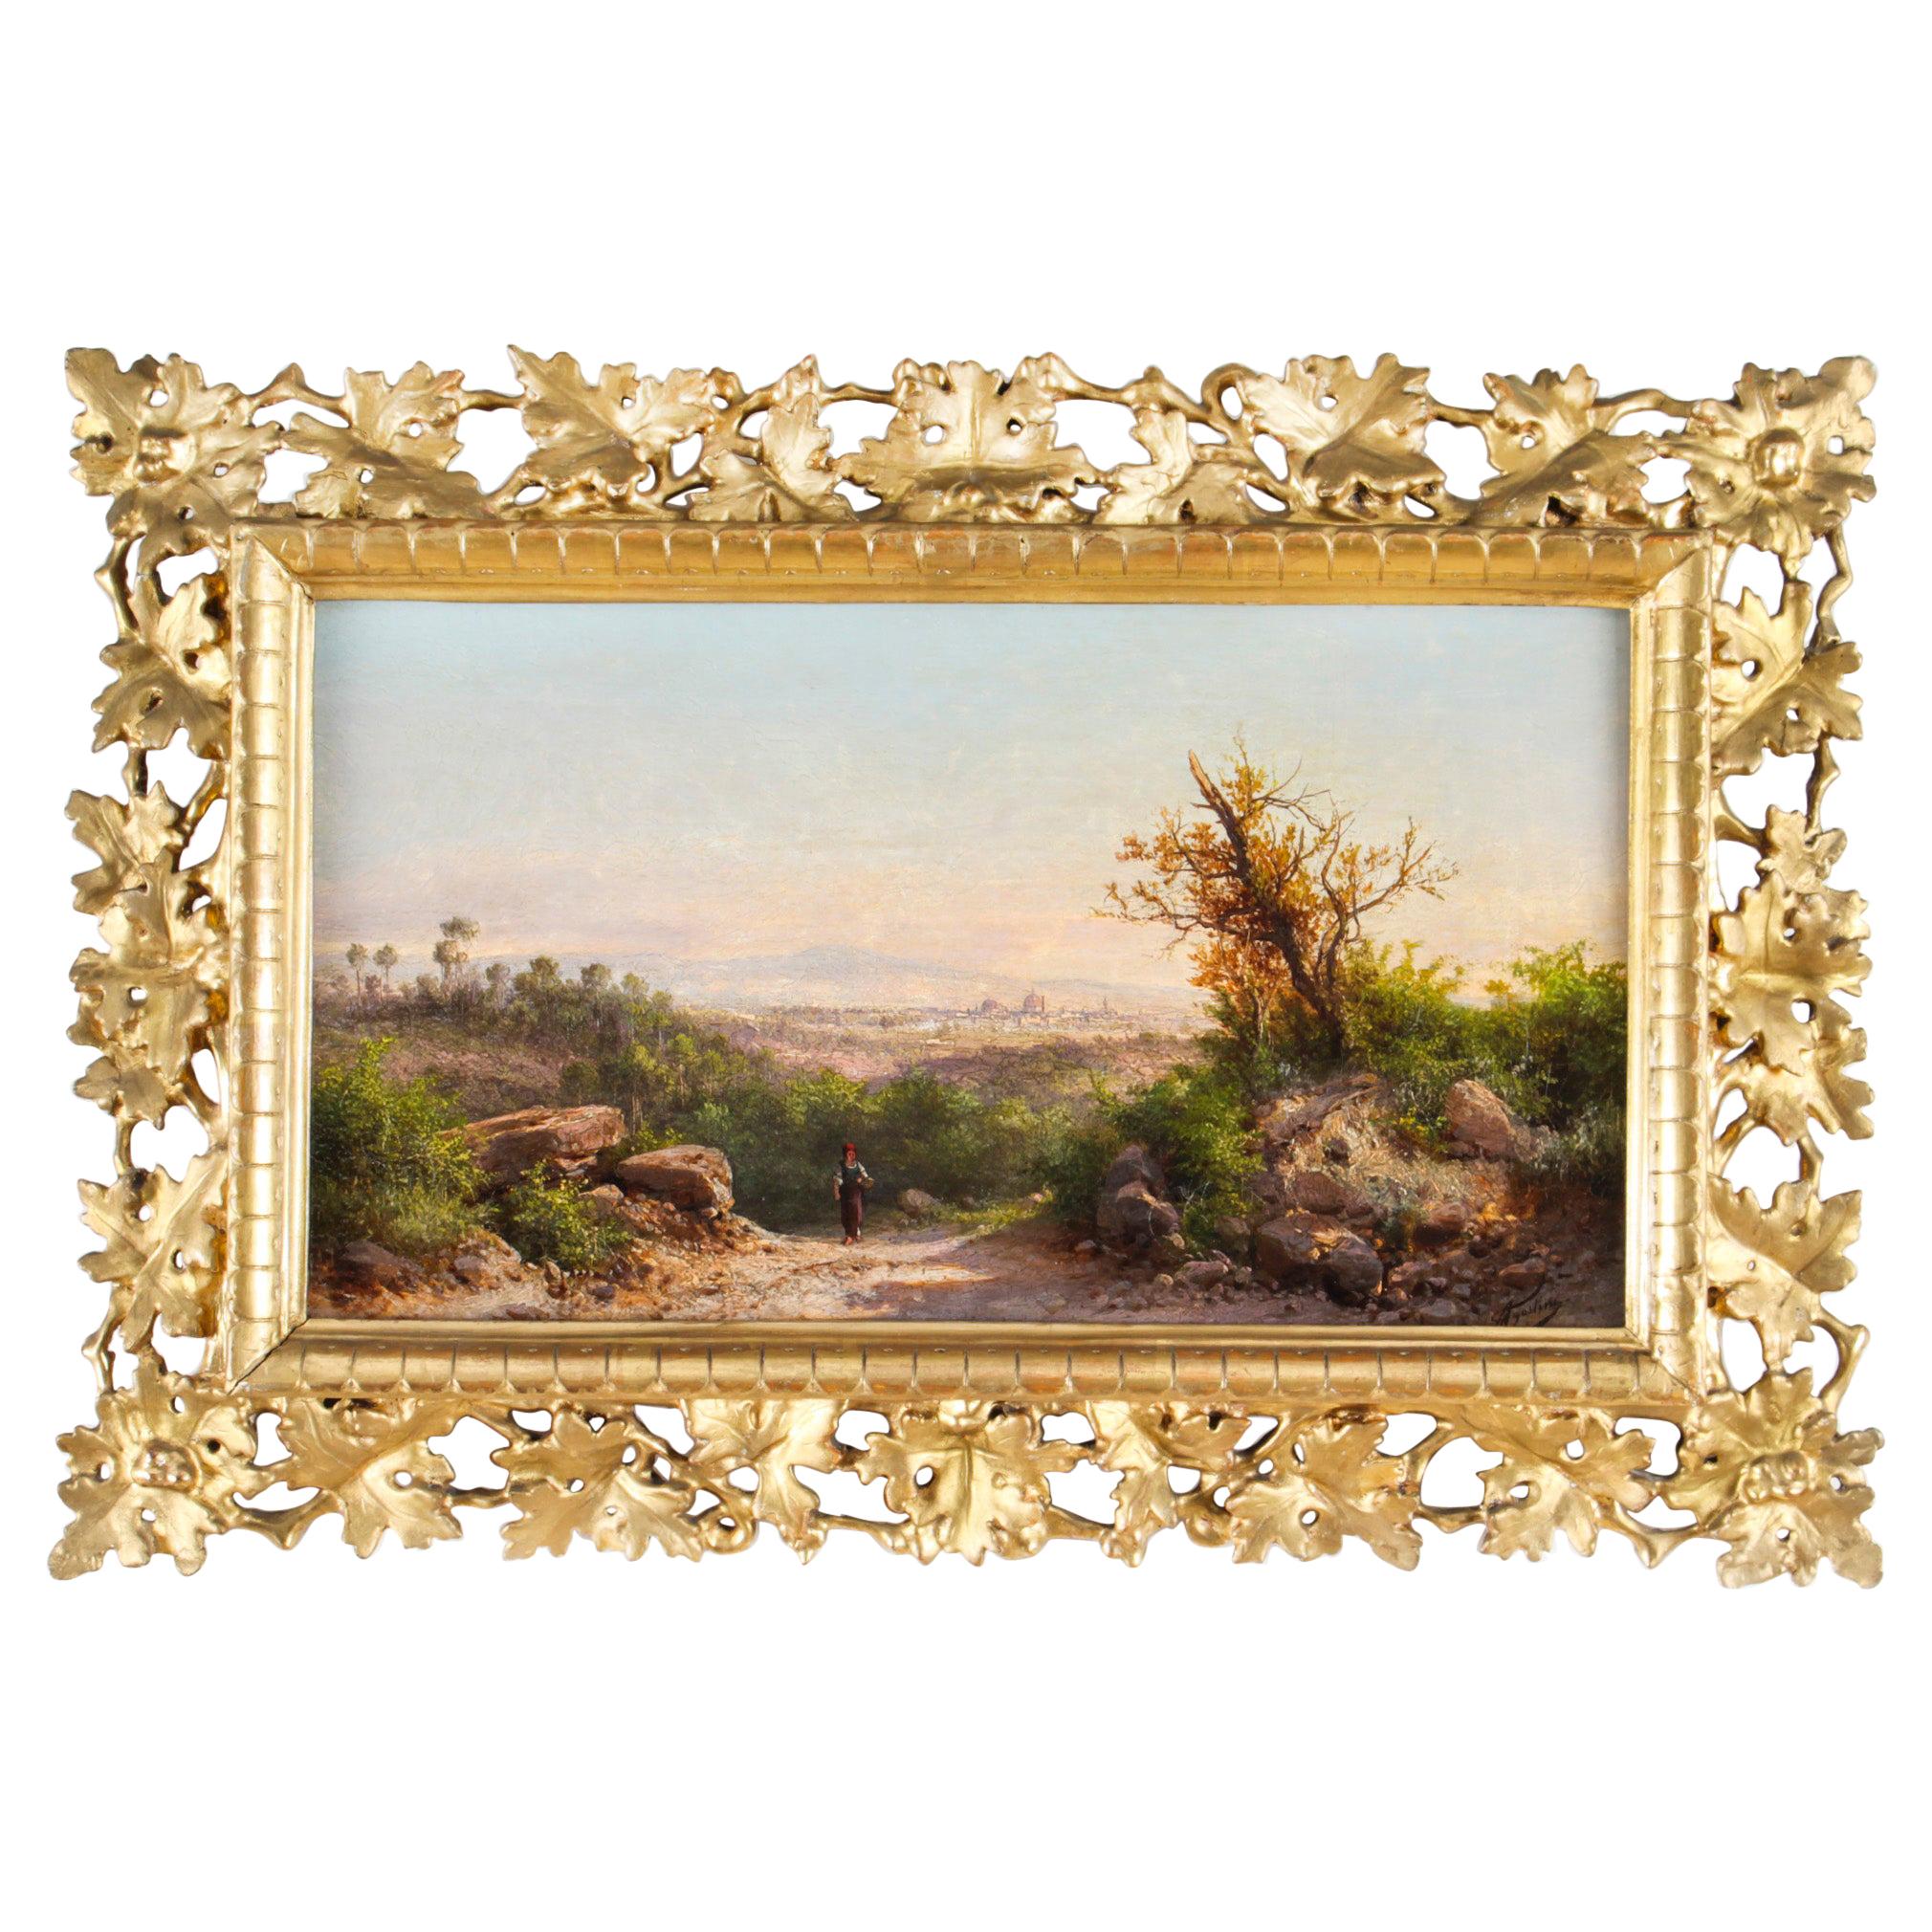 Antique Italian Landscape Oil Painting Guido Agostini 19thC